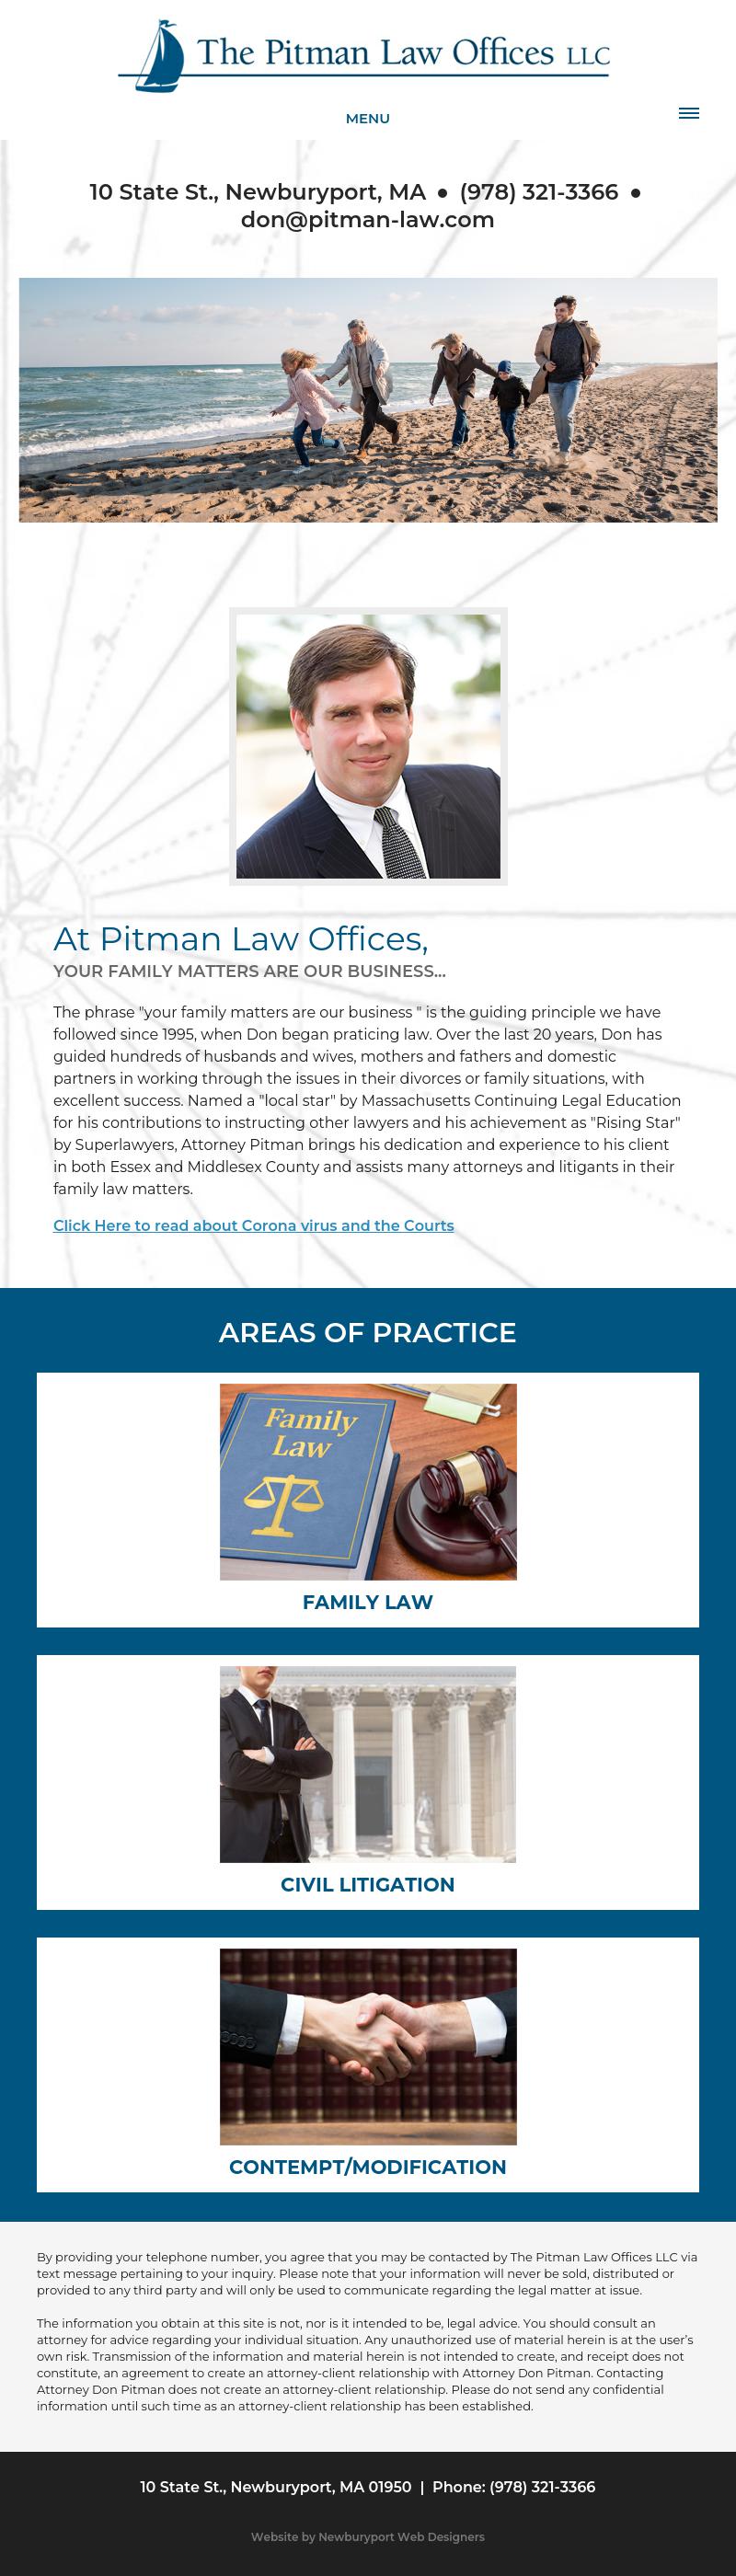 The Pitman Law Offices LLC - Newburyport MA Lawyers